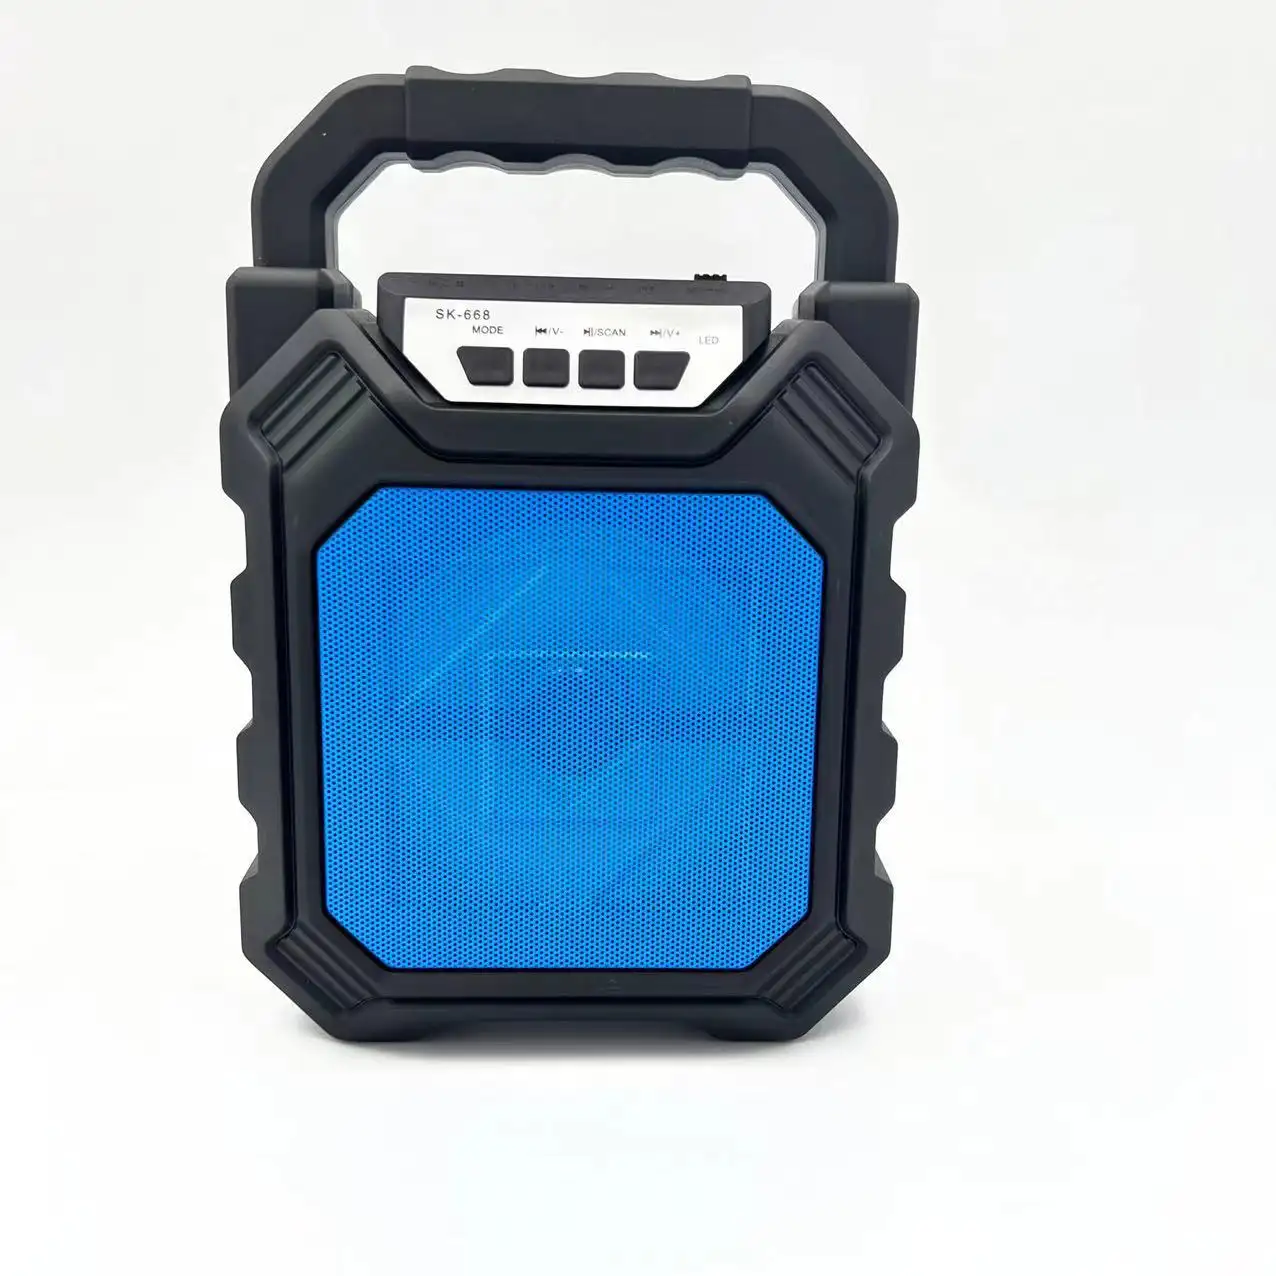 Outdoor Subwoofer Mini Portable 668 Wireless Speaker Support TF Card USB Slot Sound Equipment/Amplifiers/Speaker